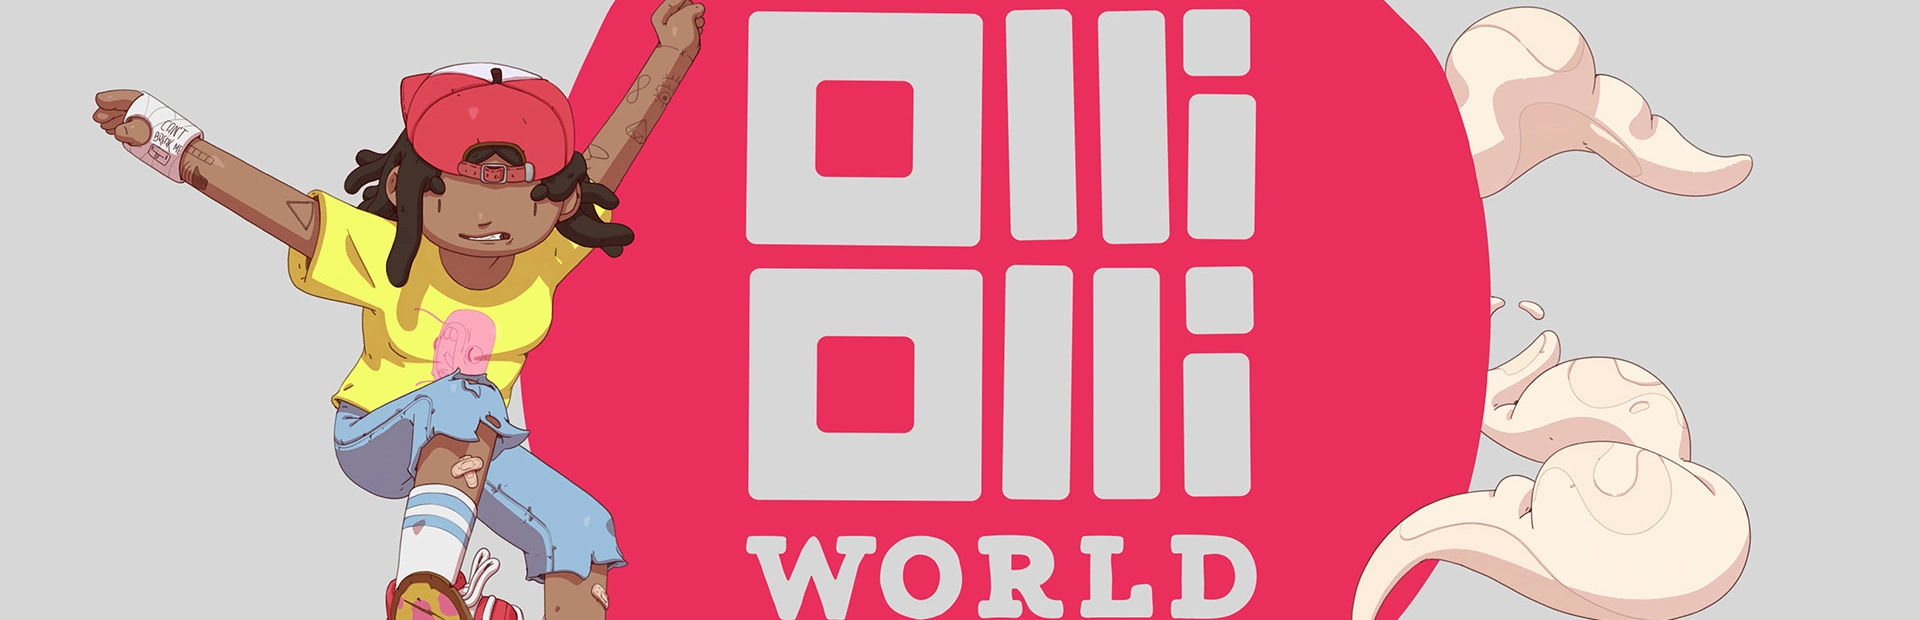 OlliOlli World.banner3